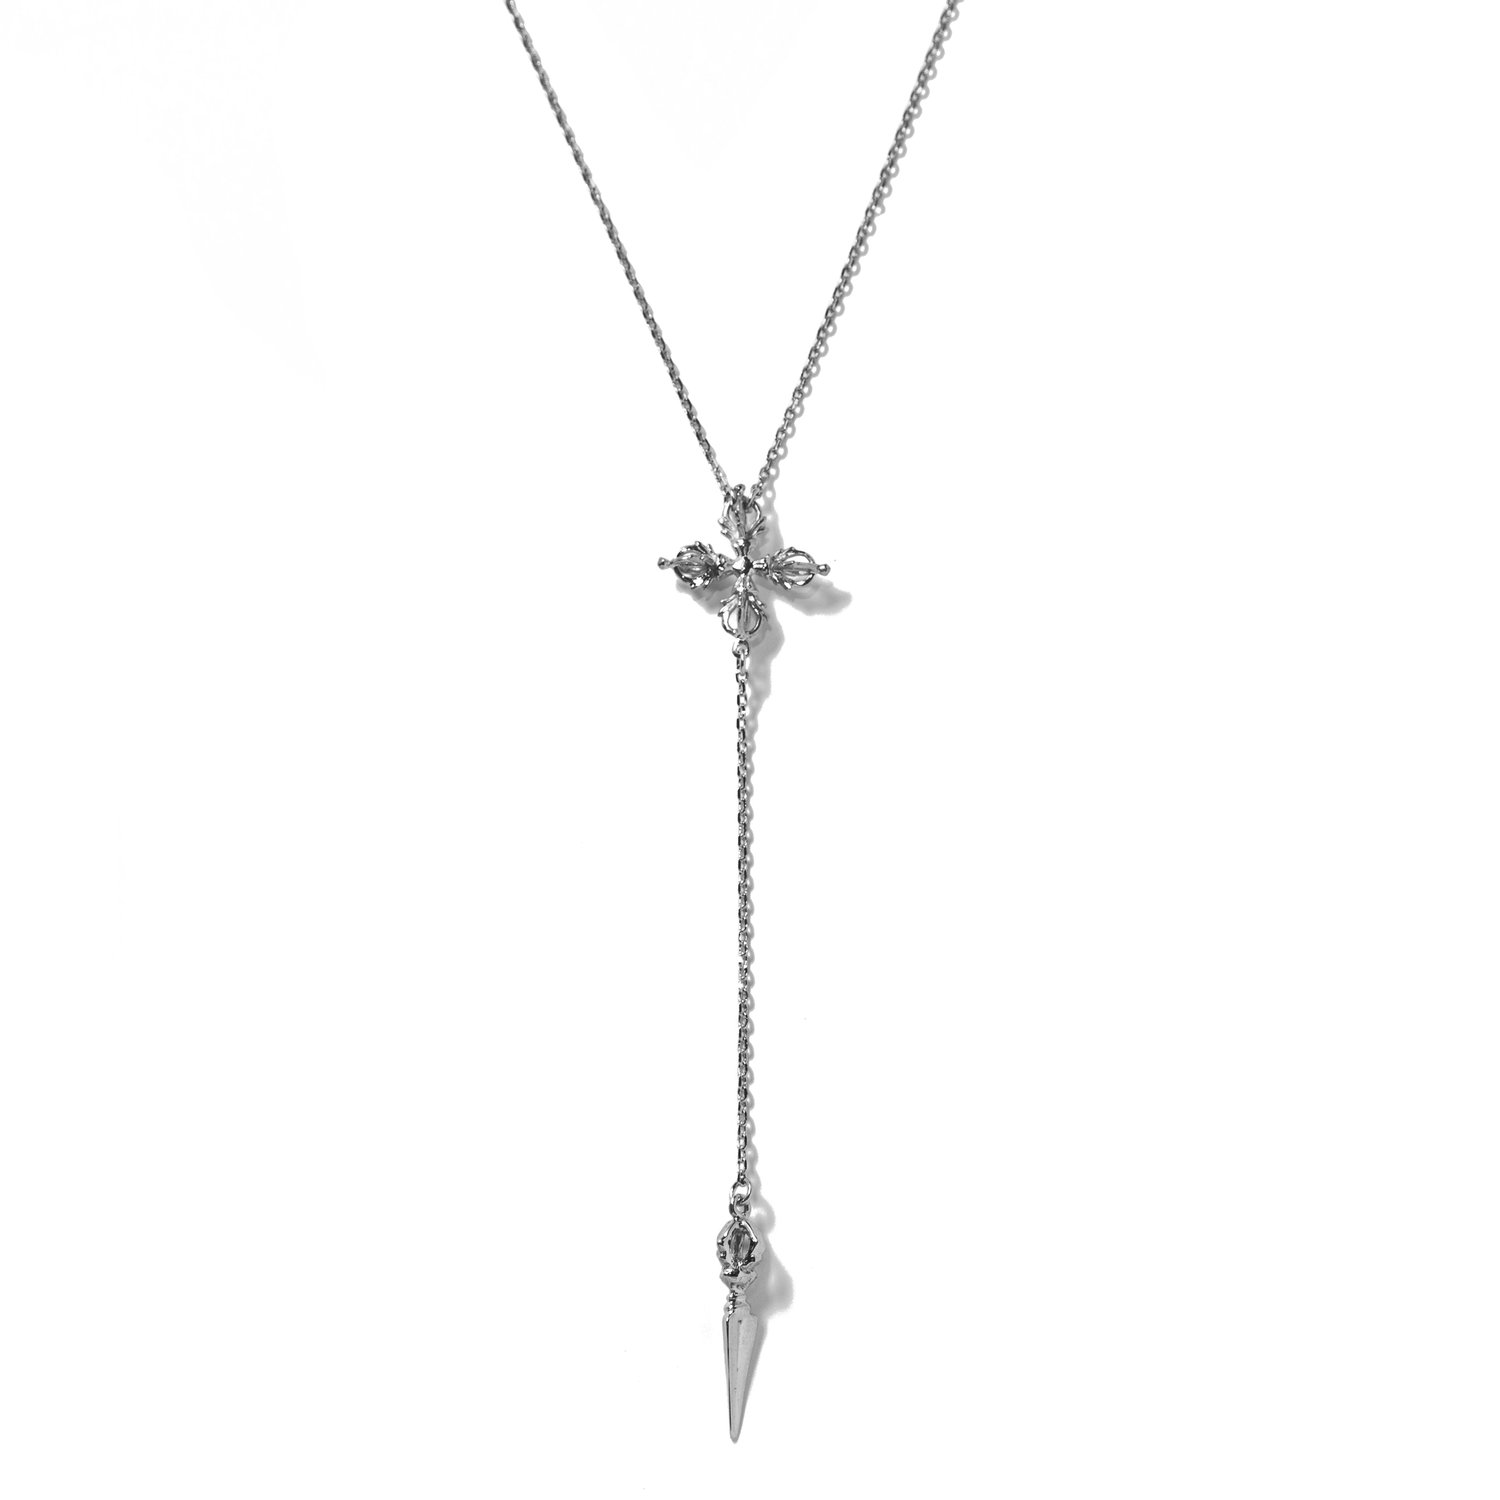 Image of Brass Pendulum Necklace